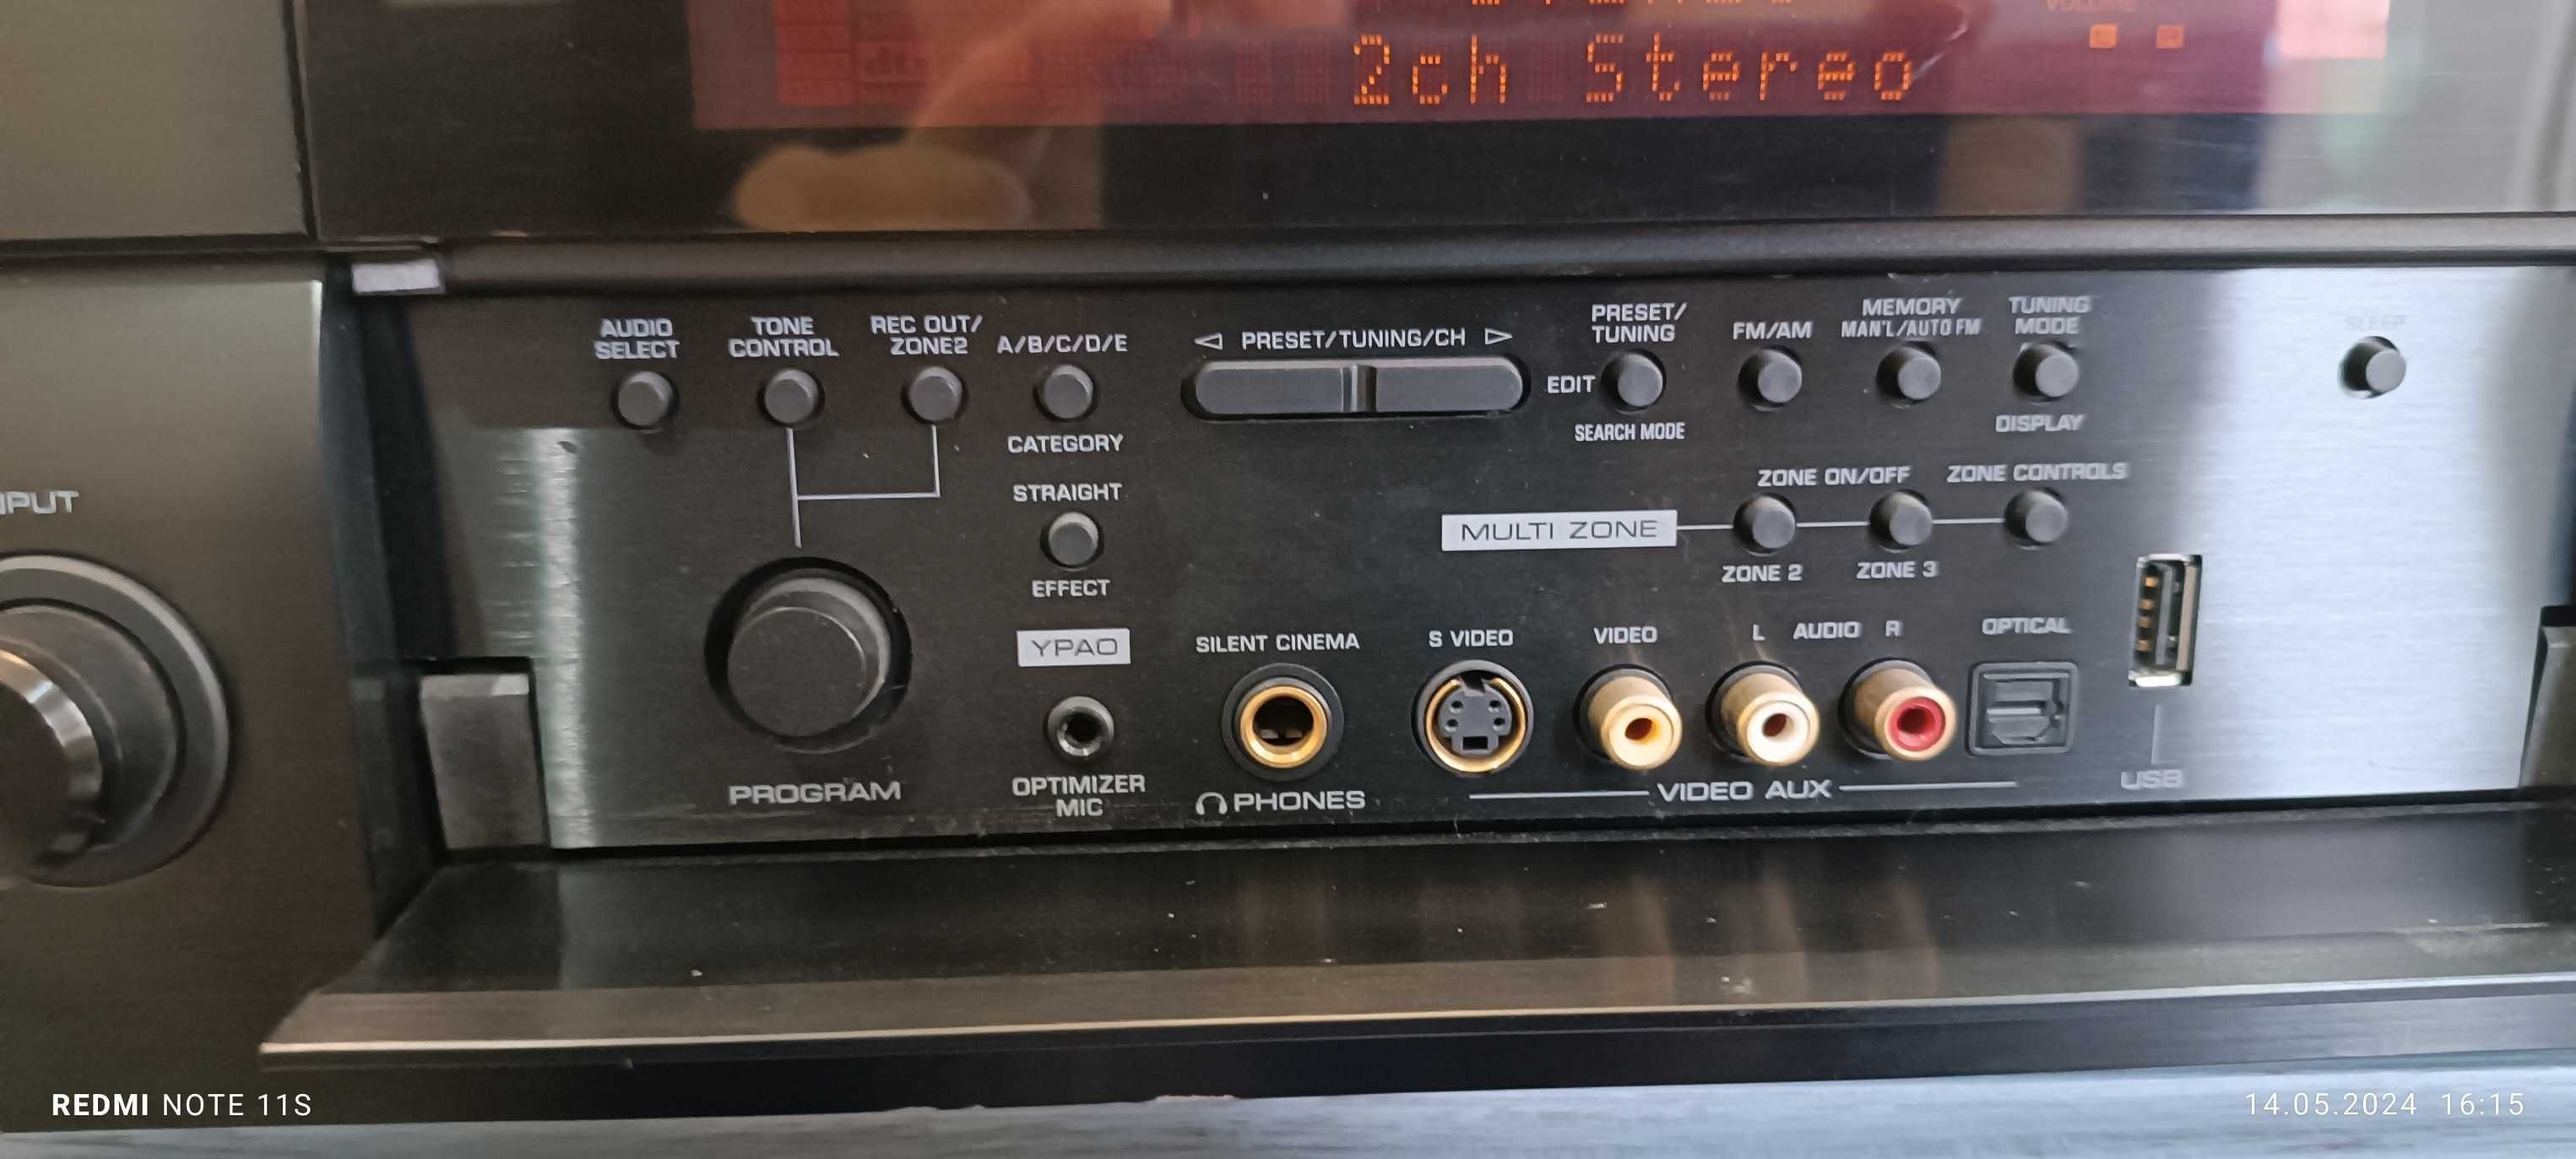 Yamaha Rx-v3800 7.1 Channel Surround Sound AV Receiver